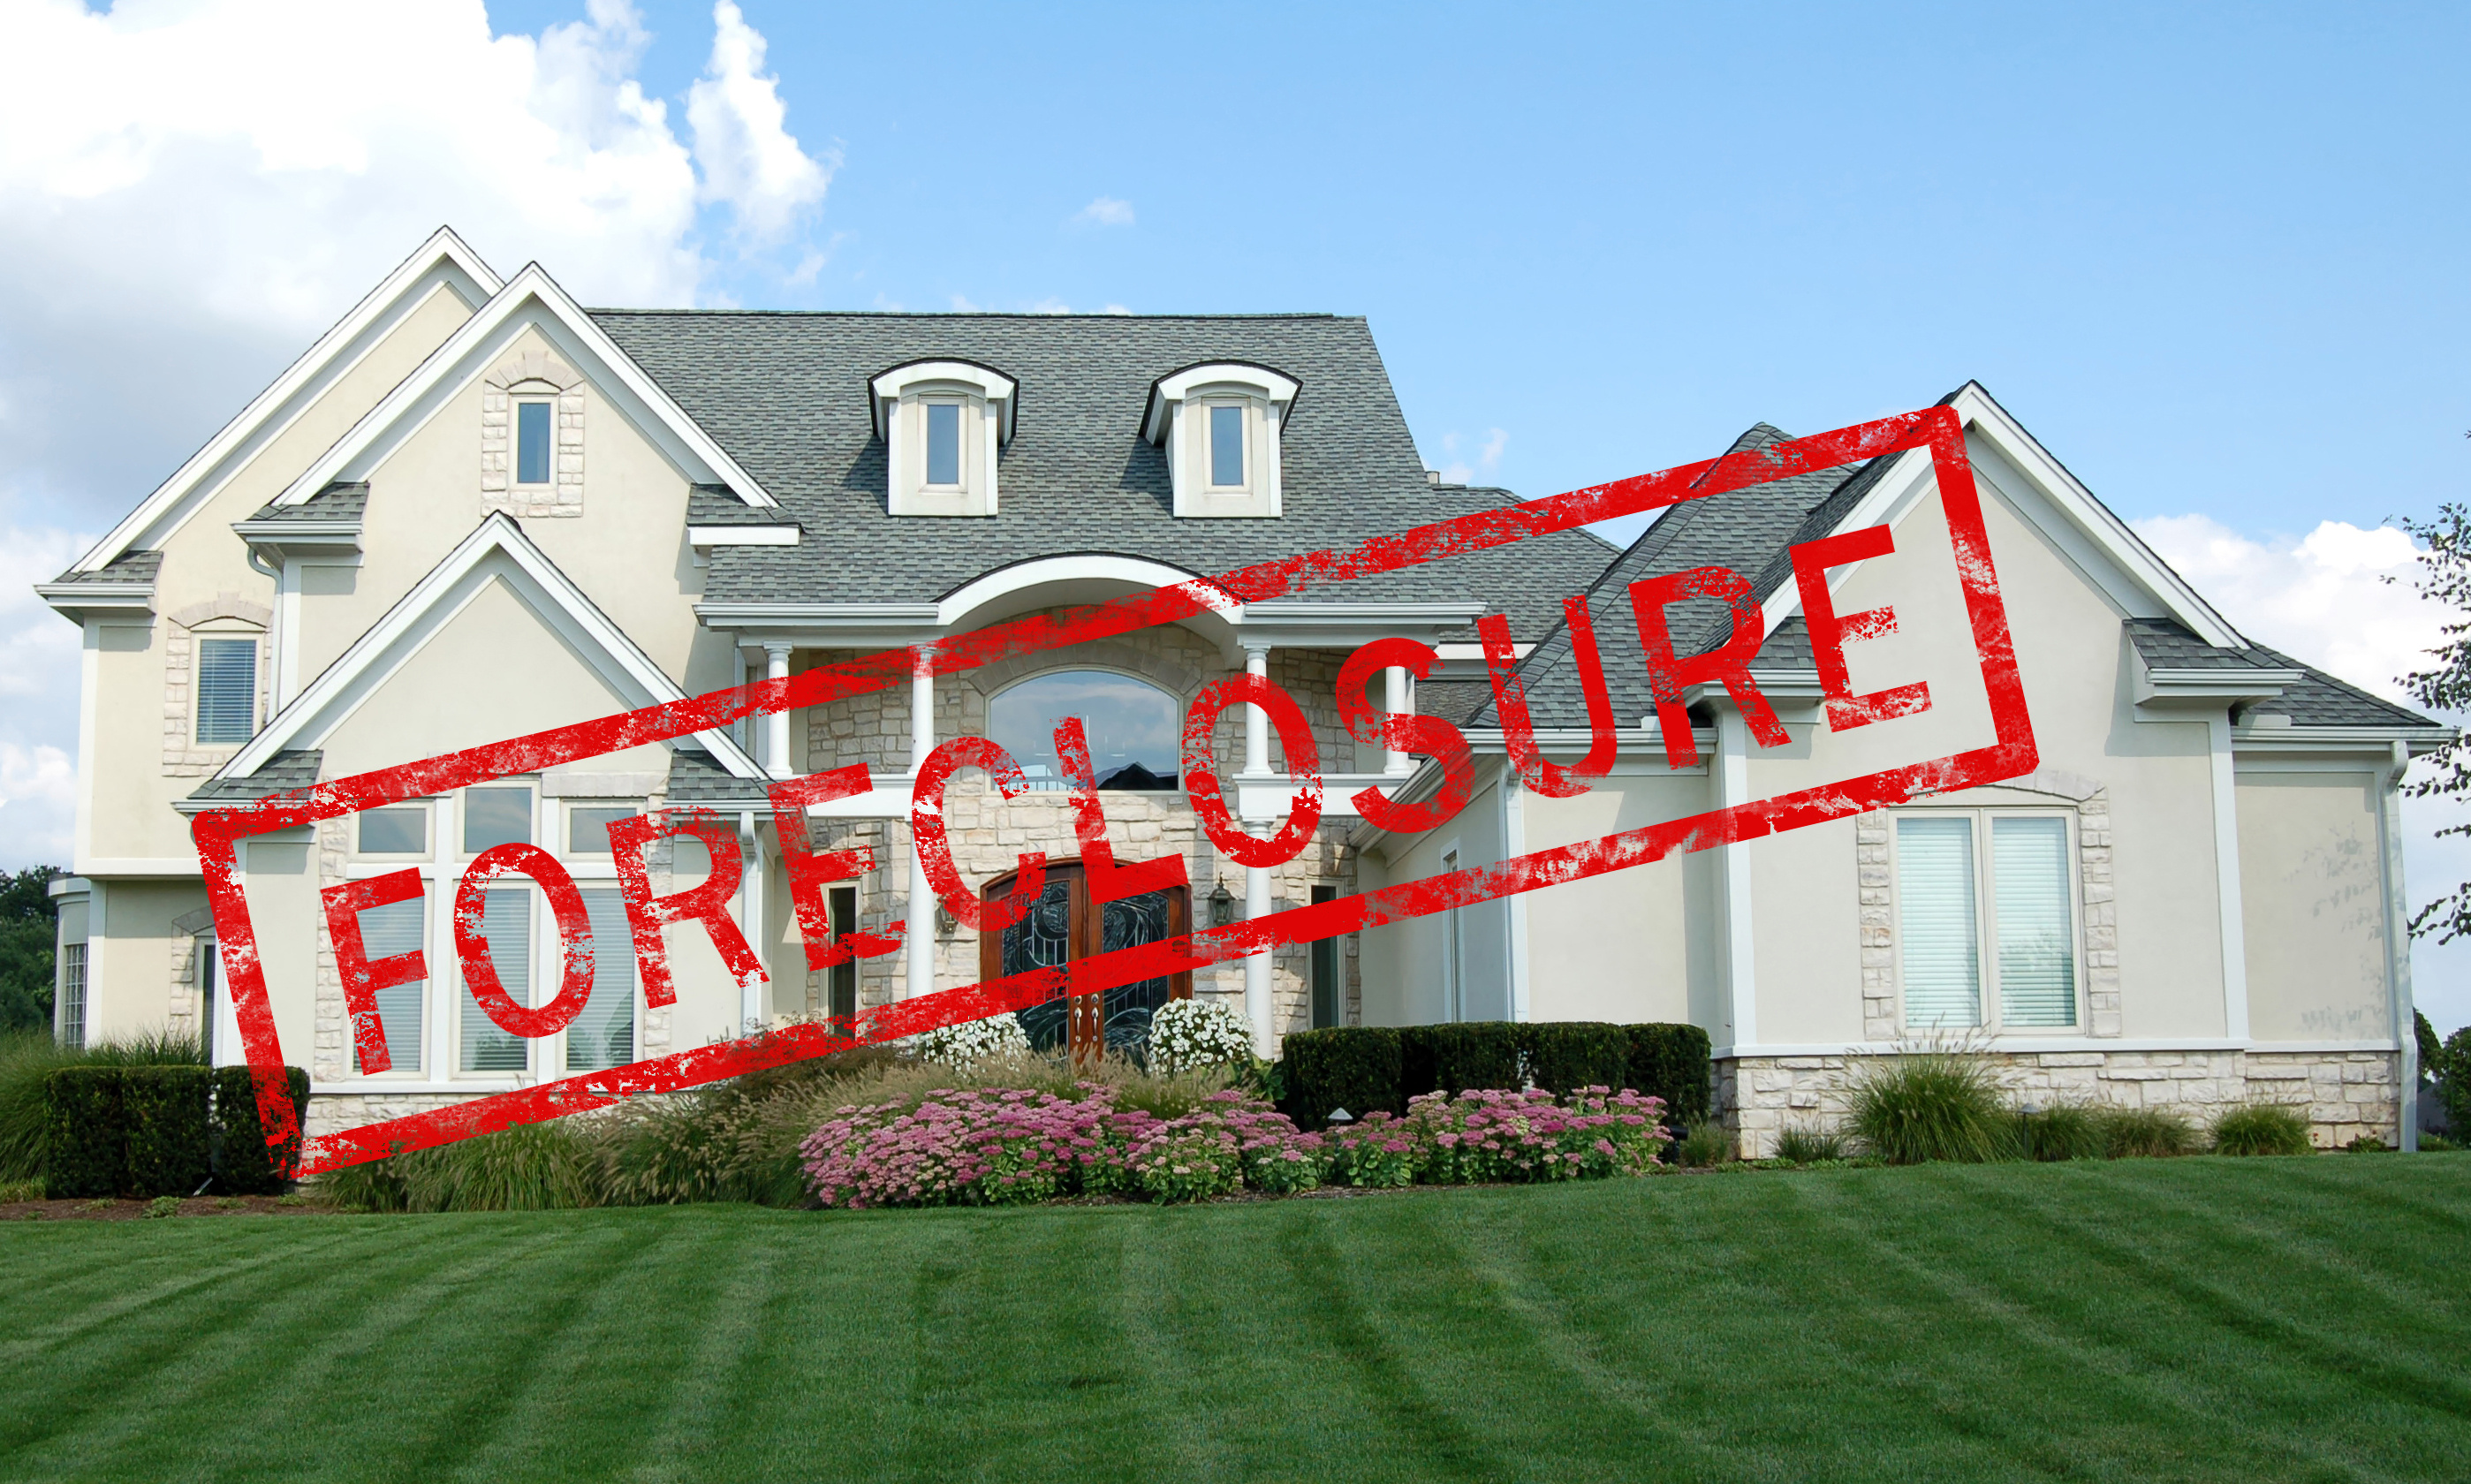 Call Wilson & Associates when you need valuations regarding Montgomery foreclosures